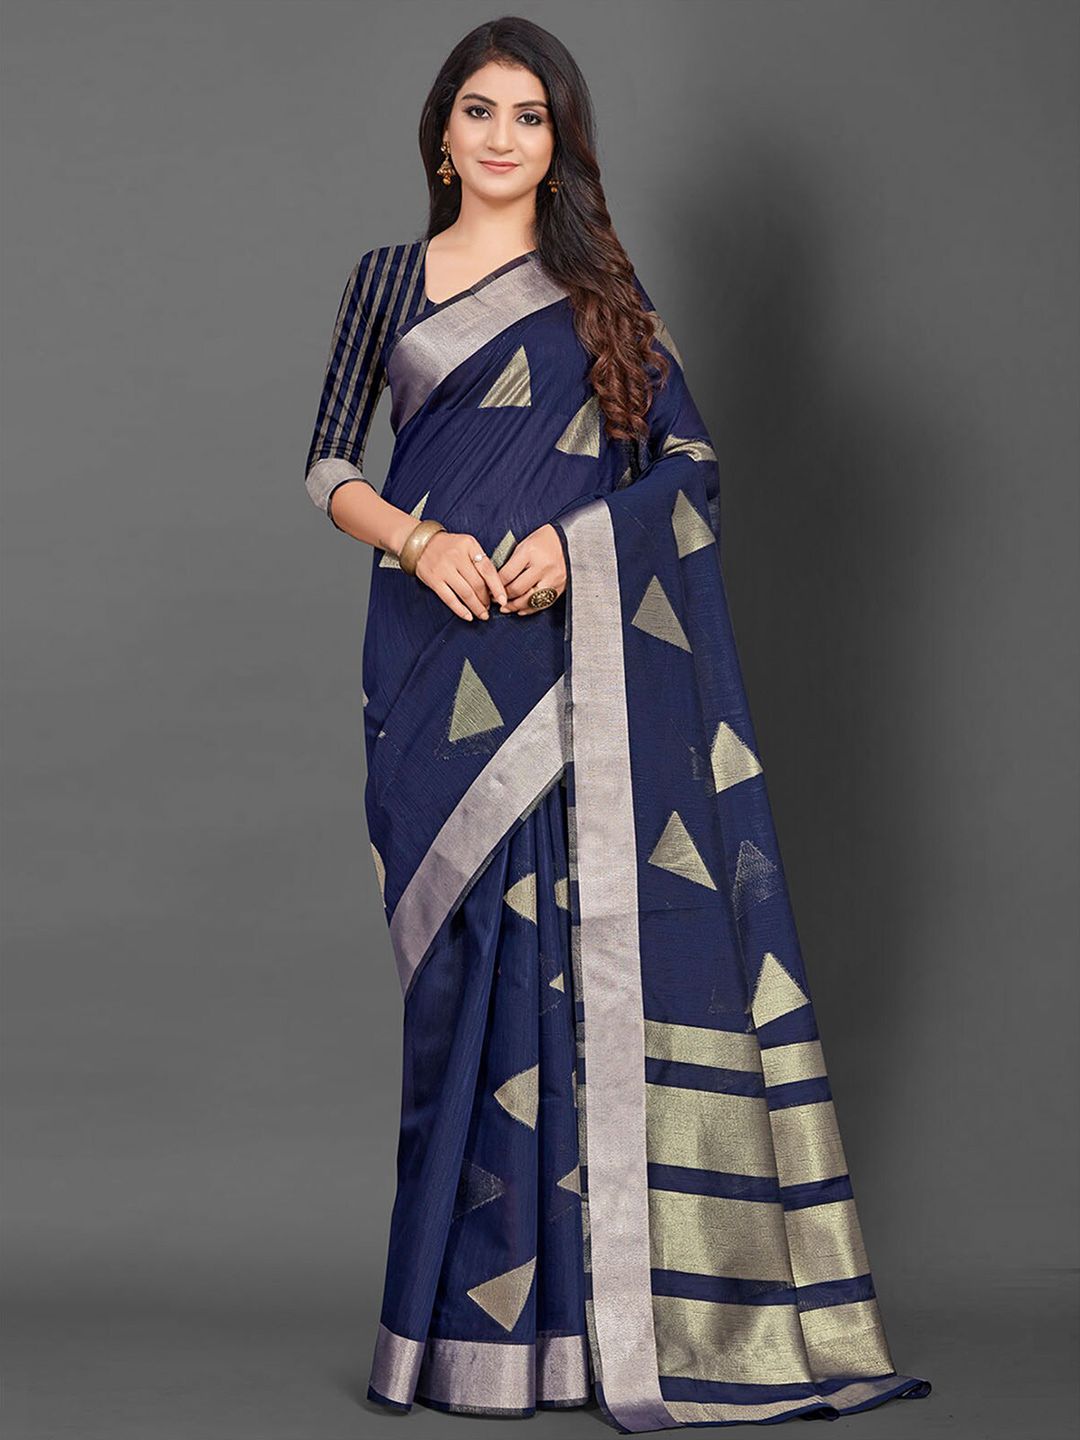 ODETTE Navy Blue & Gold-Toned Woven Design Zari Linen Blend Banarasi Saree Price in India